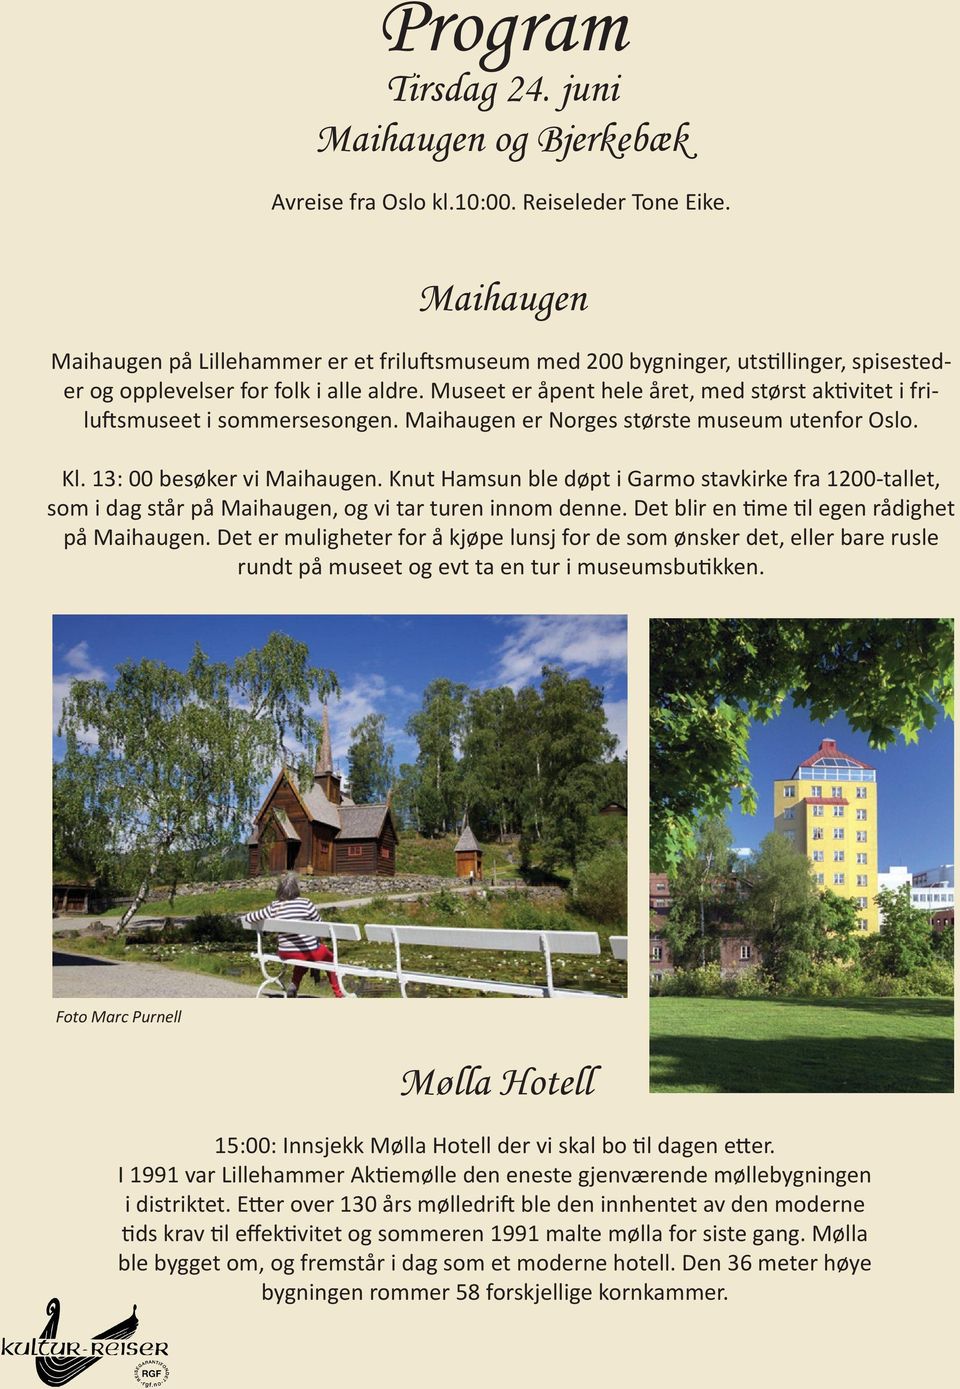 Museet er åpent hele året, med størst aktivitet i friluftsmuseet i sommersesongen. Maihaugen er Norges største museum utenfor Oslo. Kl. 13: 00 besøker vi Maihaugen.